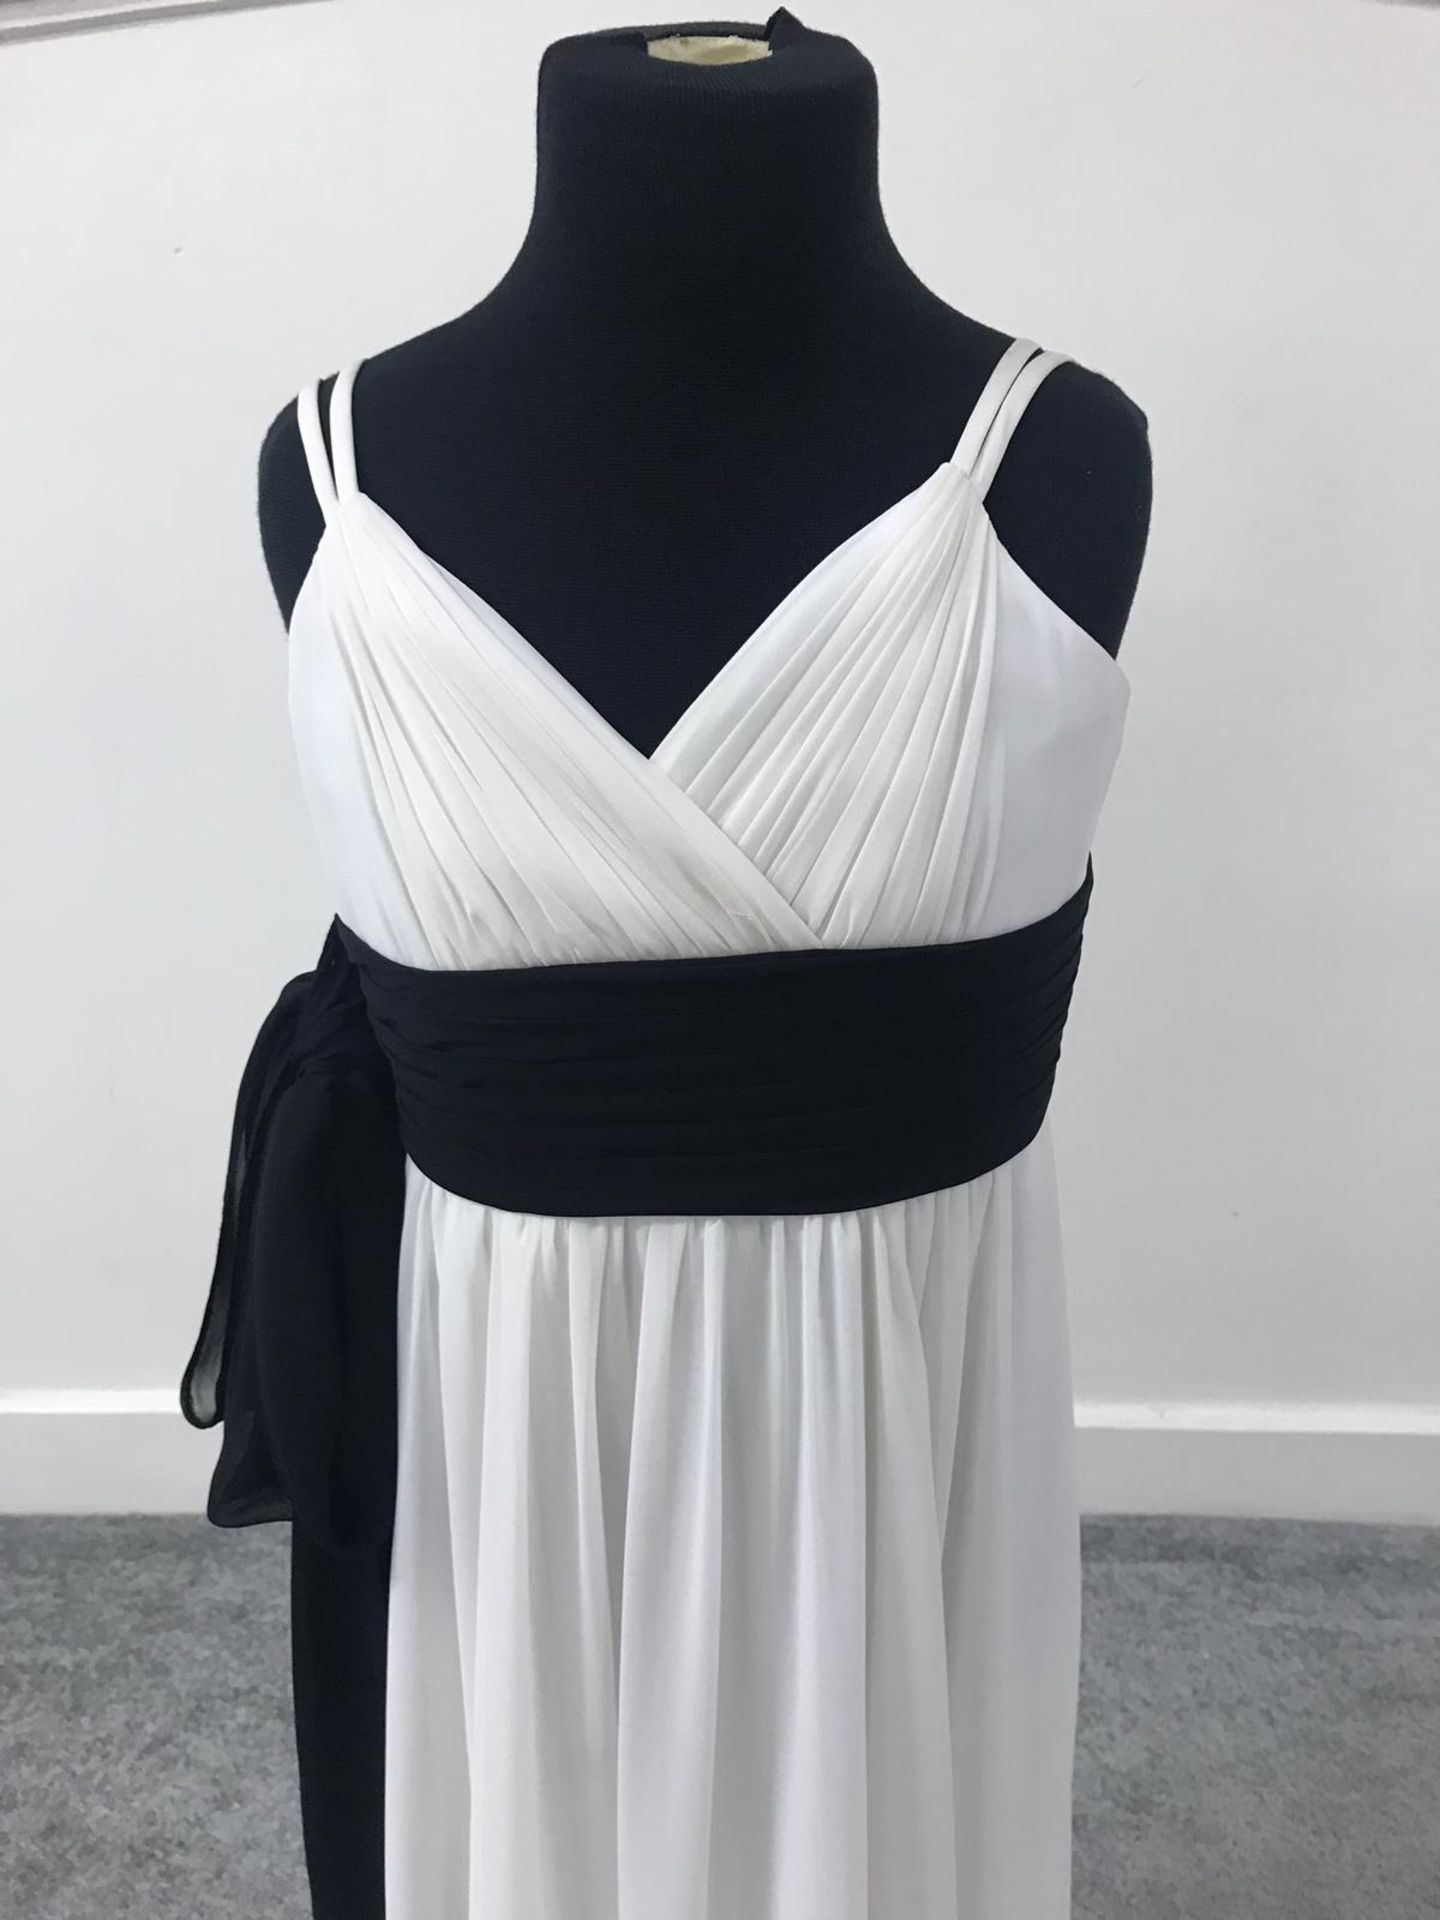 Alexia Black Nd Ivory Wedding Gown Size 8